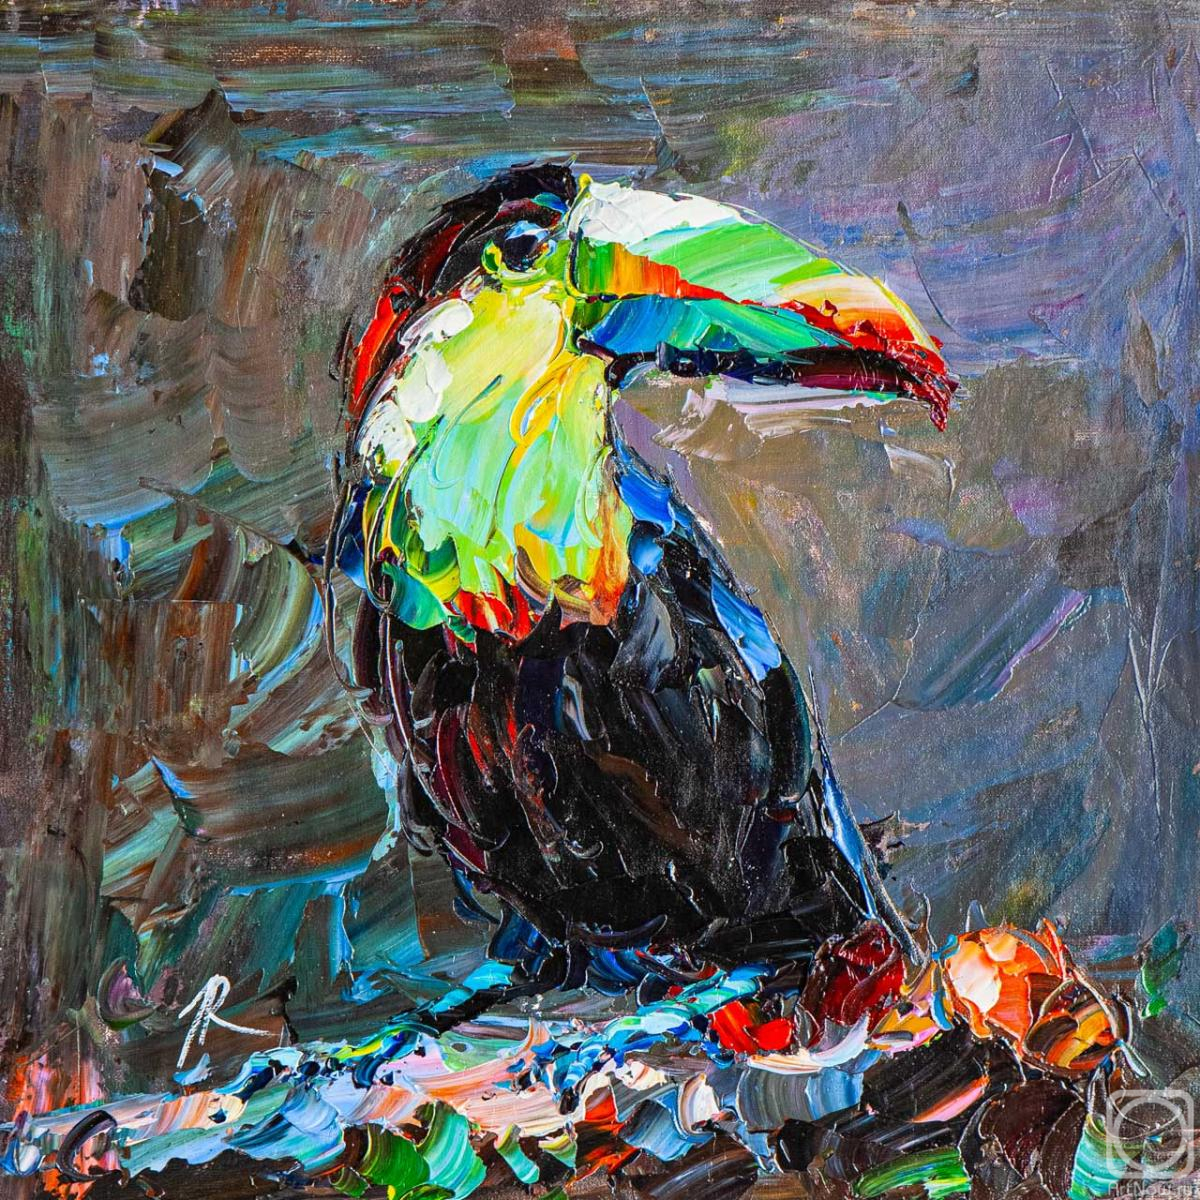 Rodries Jose. Exotic toucan